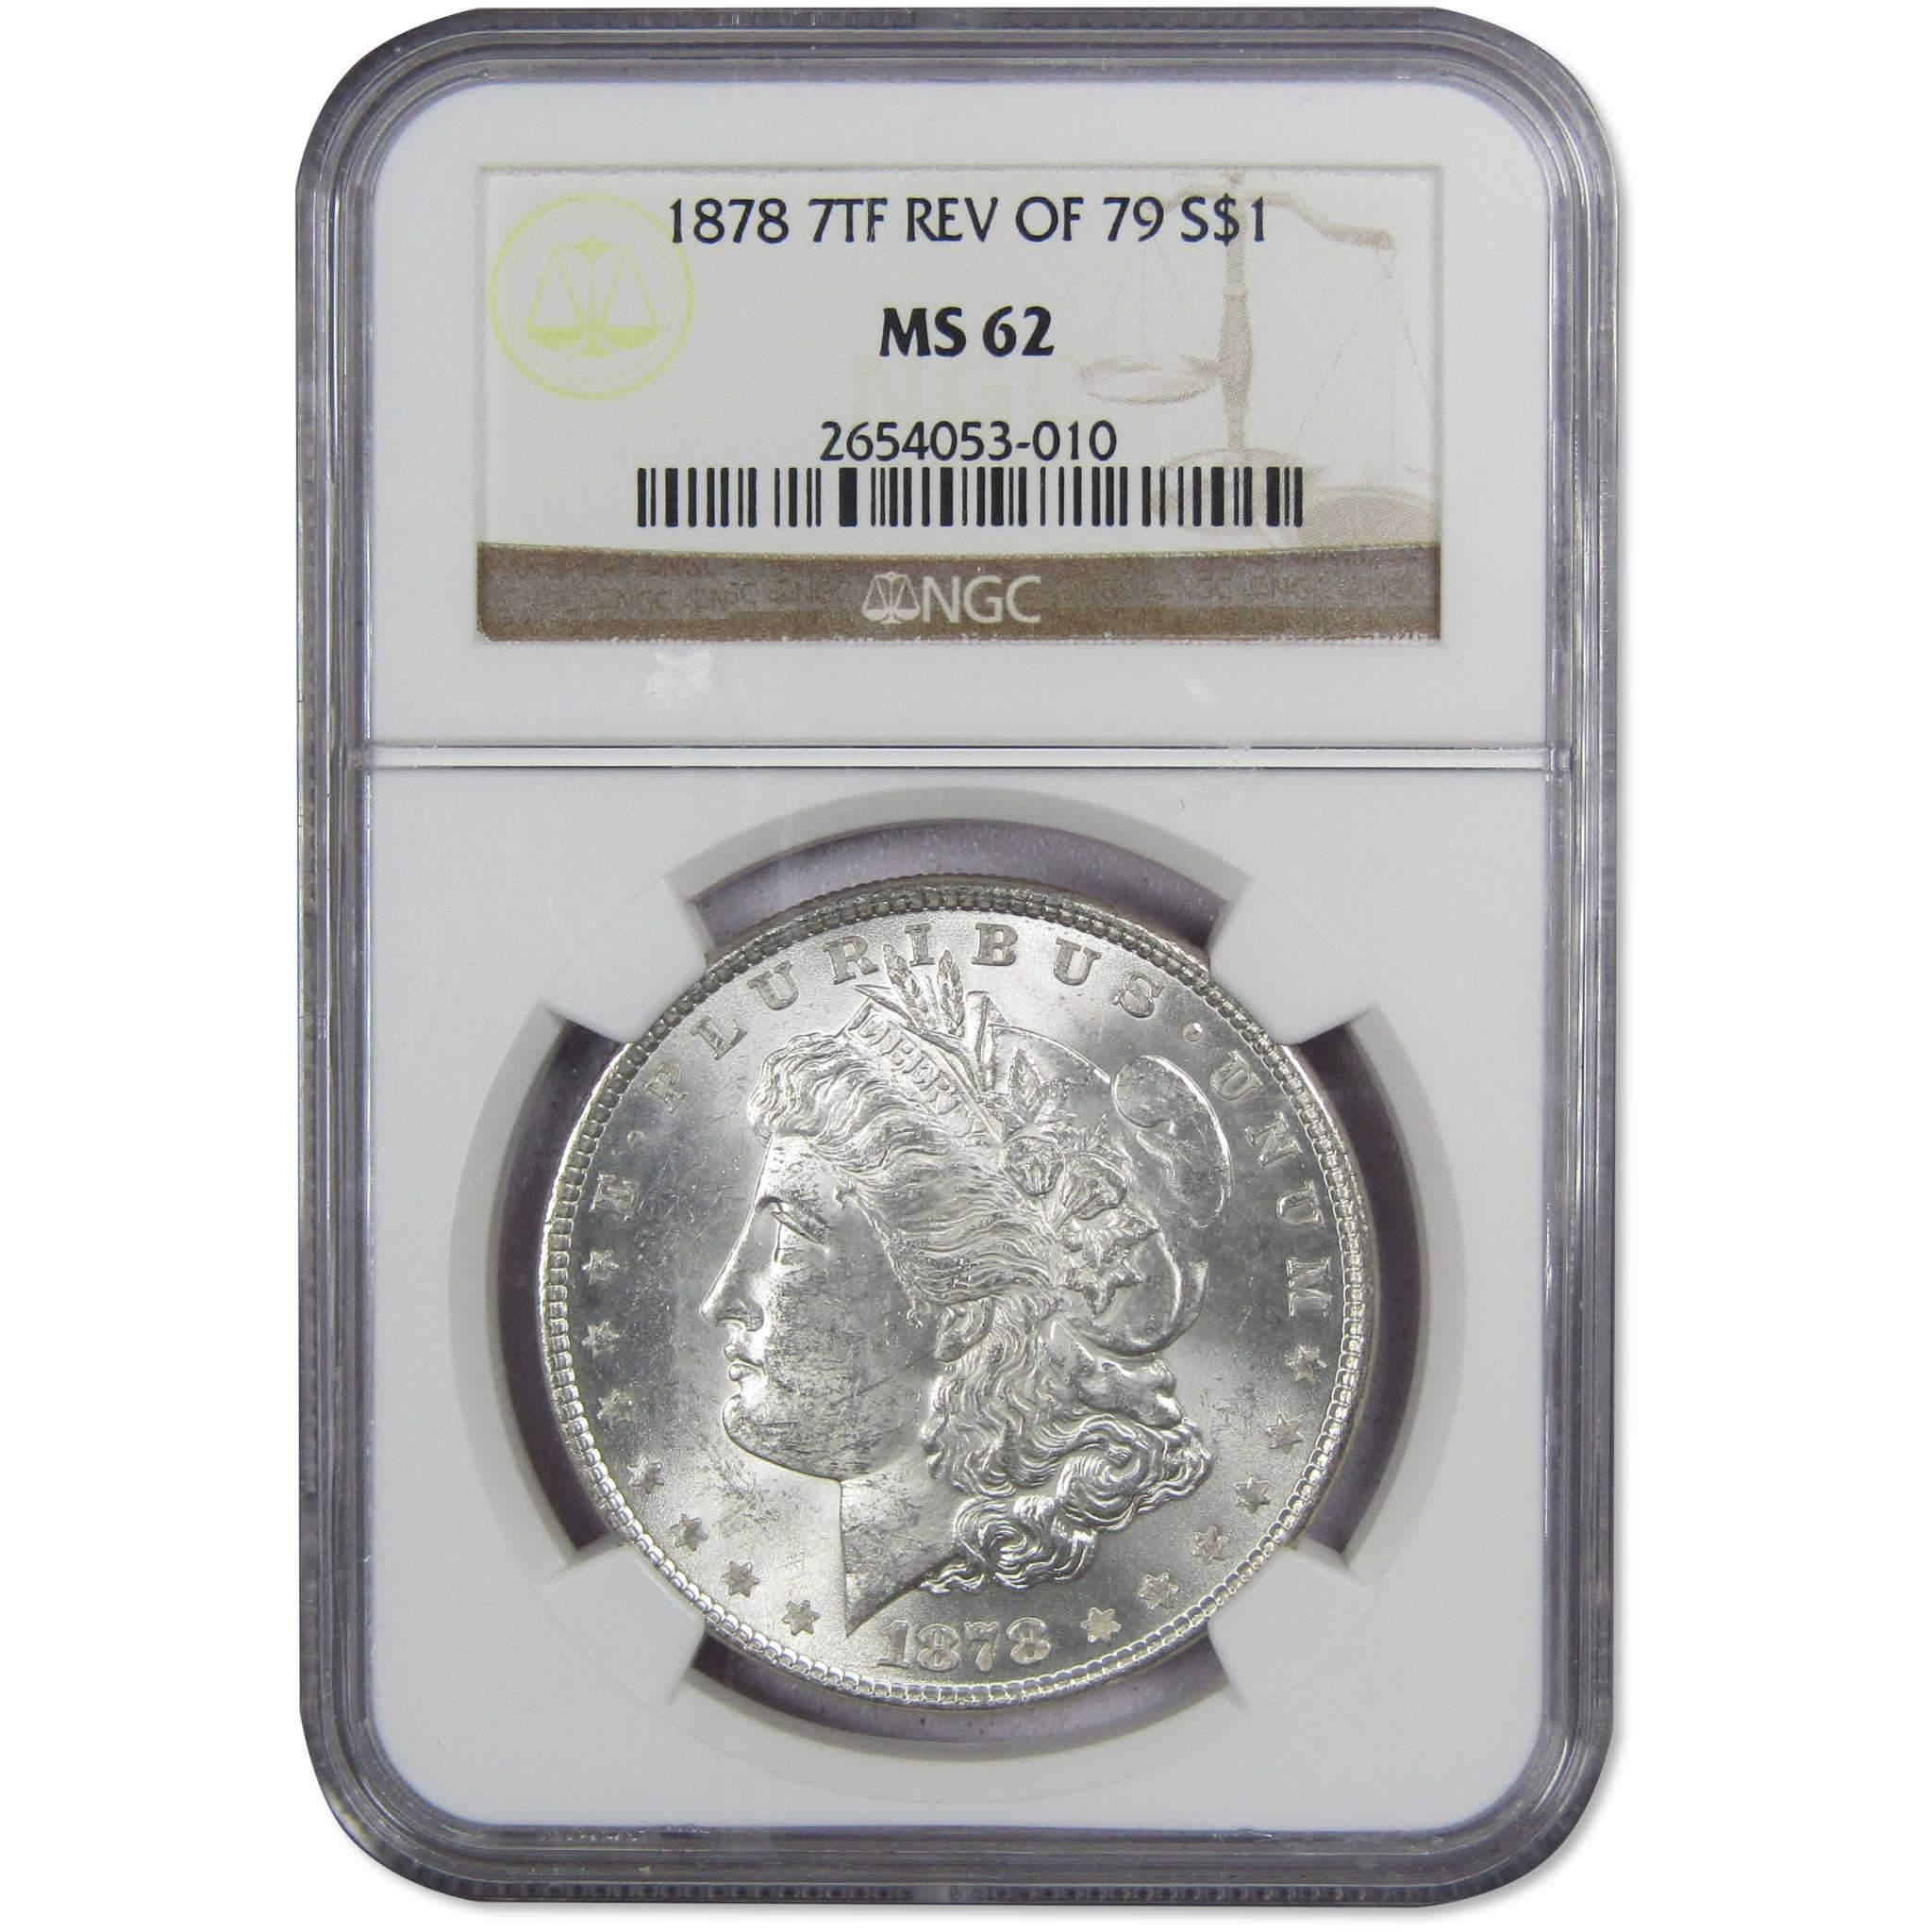 1878 7TF Rev 79 Morgan Dollar MS 62 NGC Silver SKU:IPC5111 - Morgan coin - Morgan silver dollar - Morgan silver dollar for sale - Profile Coins &amp; Collectibles